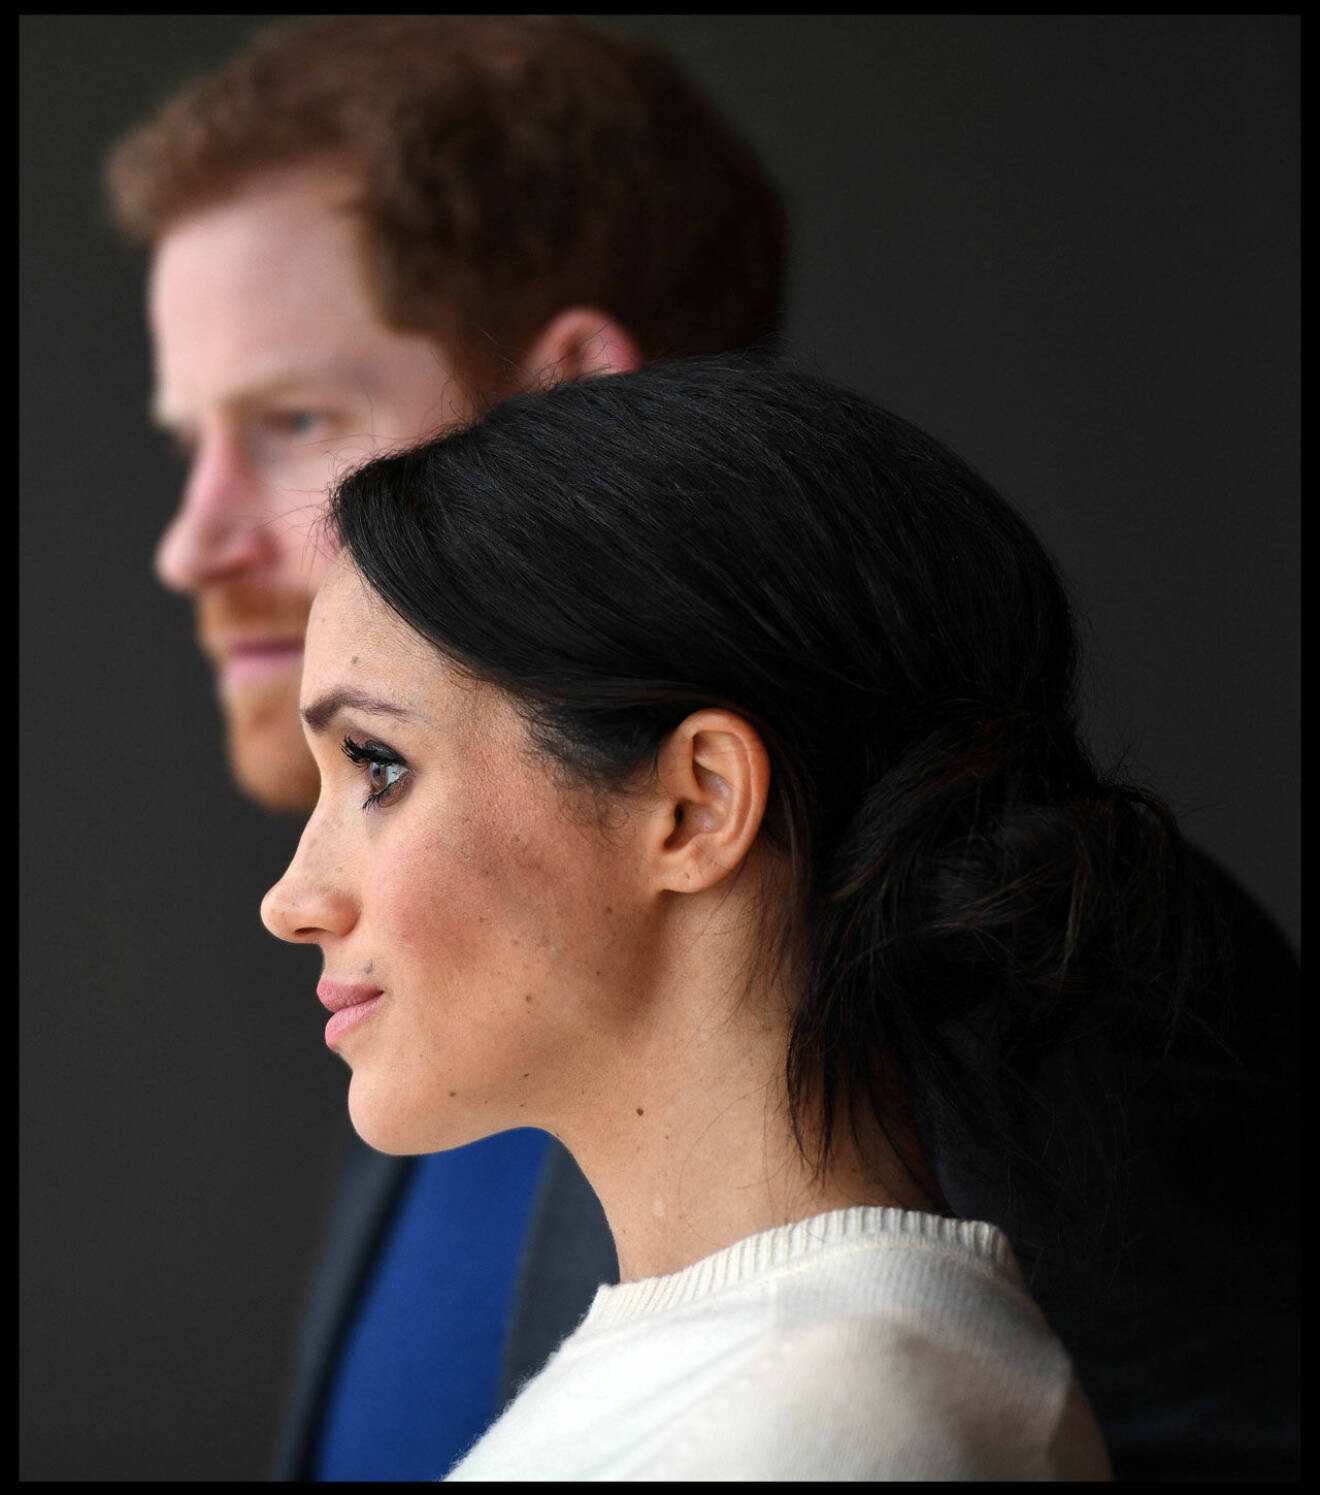 Hertiginnan Meghan Markle och prins Harry i profil.